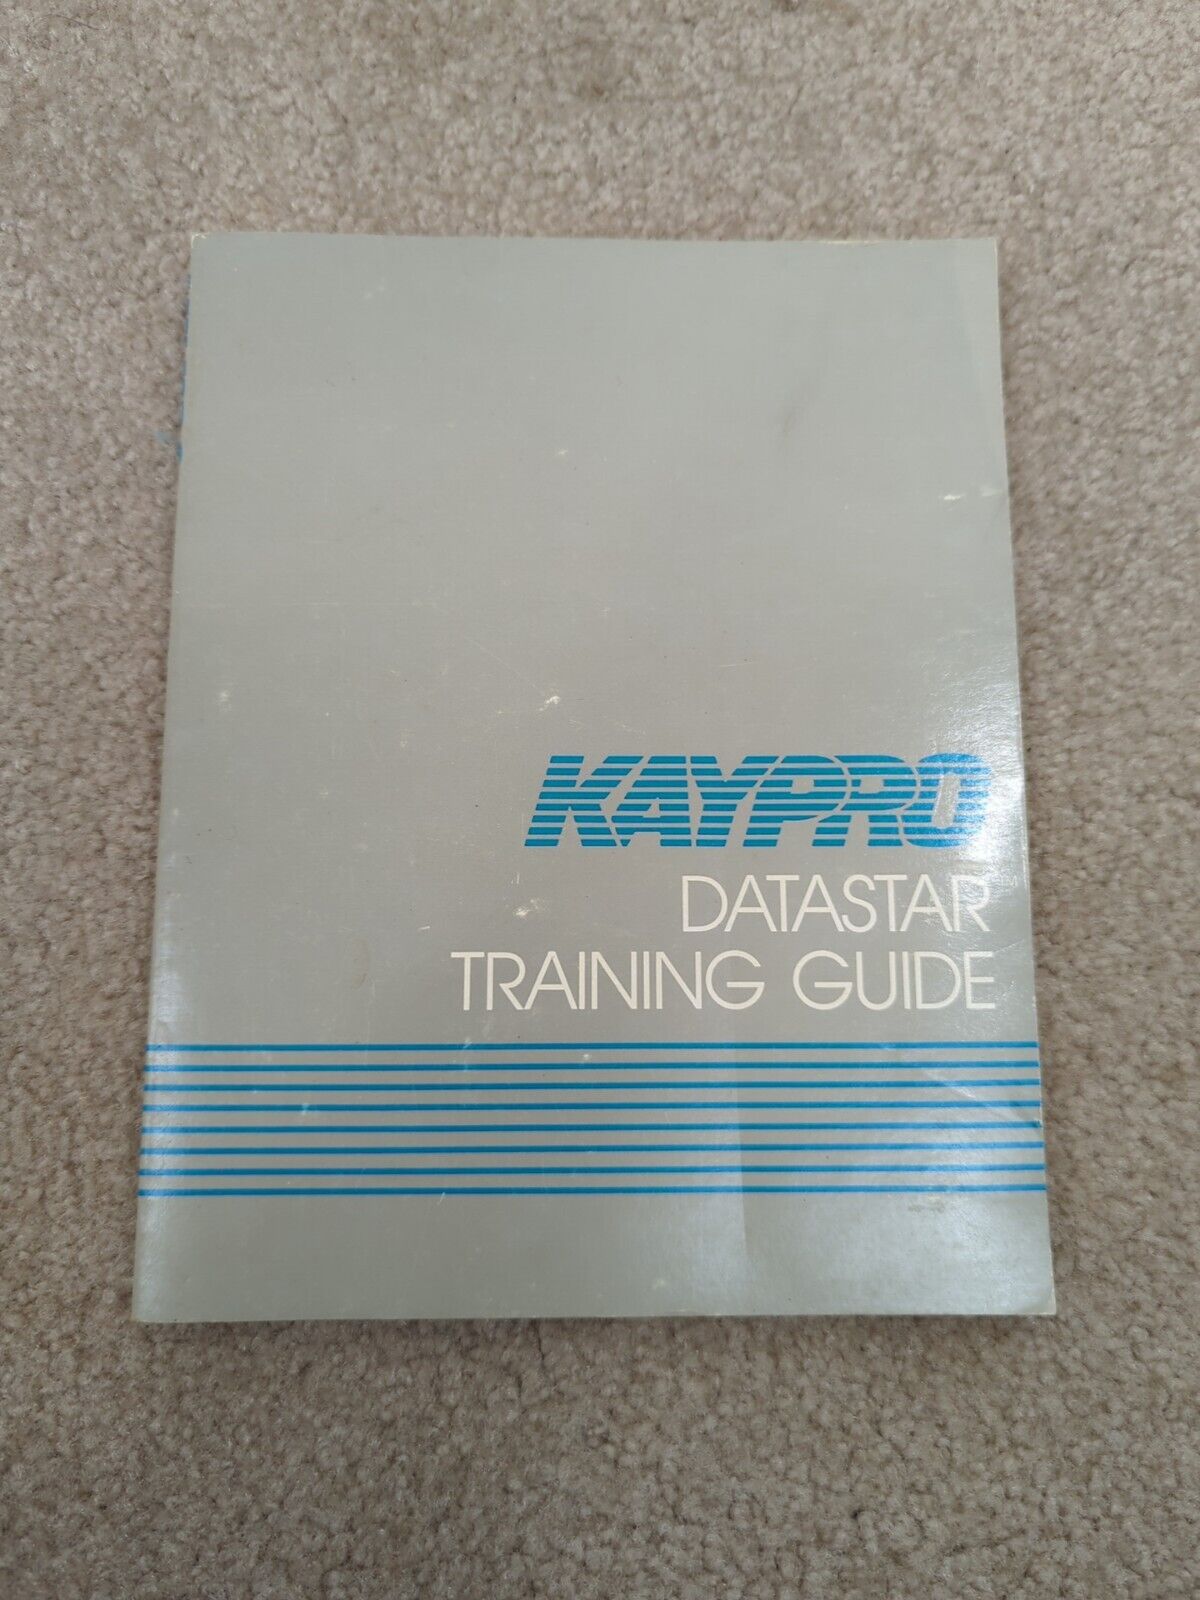 KAYPRO 10 Manual * ORIGINAL * DATASTAR Training Guide EUC